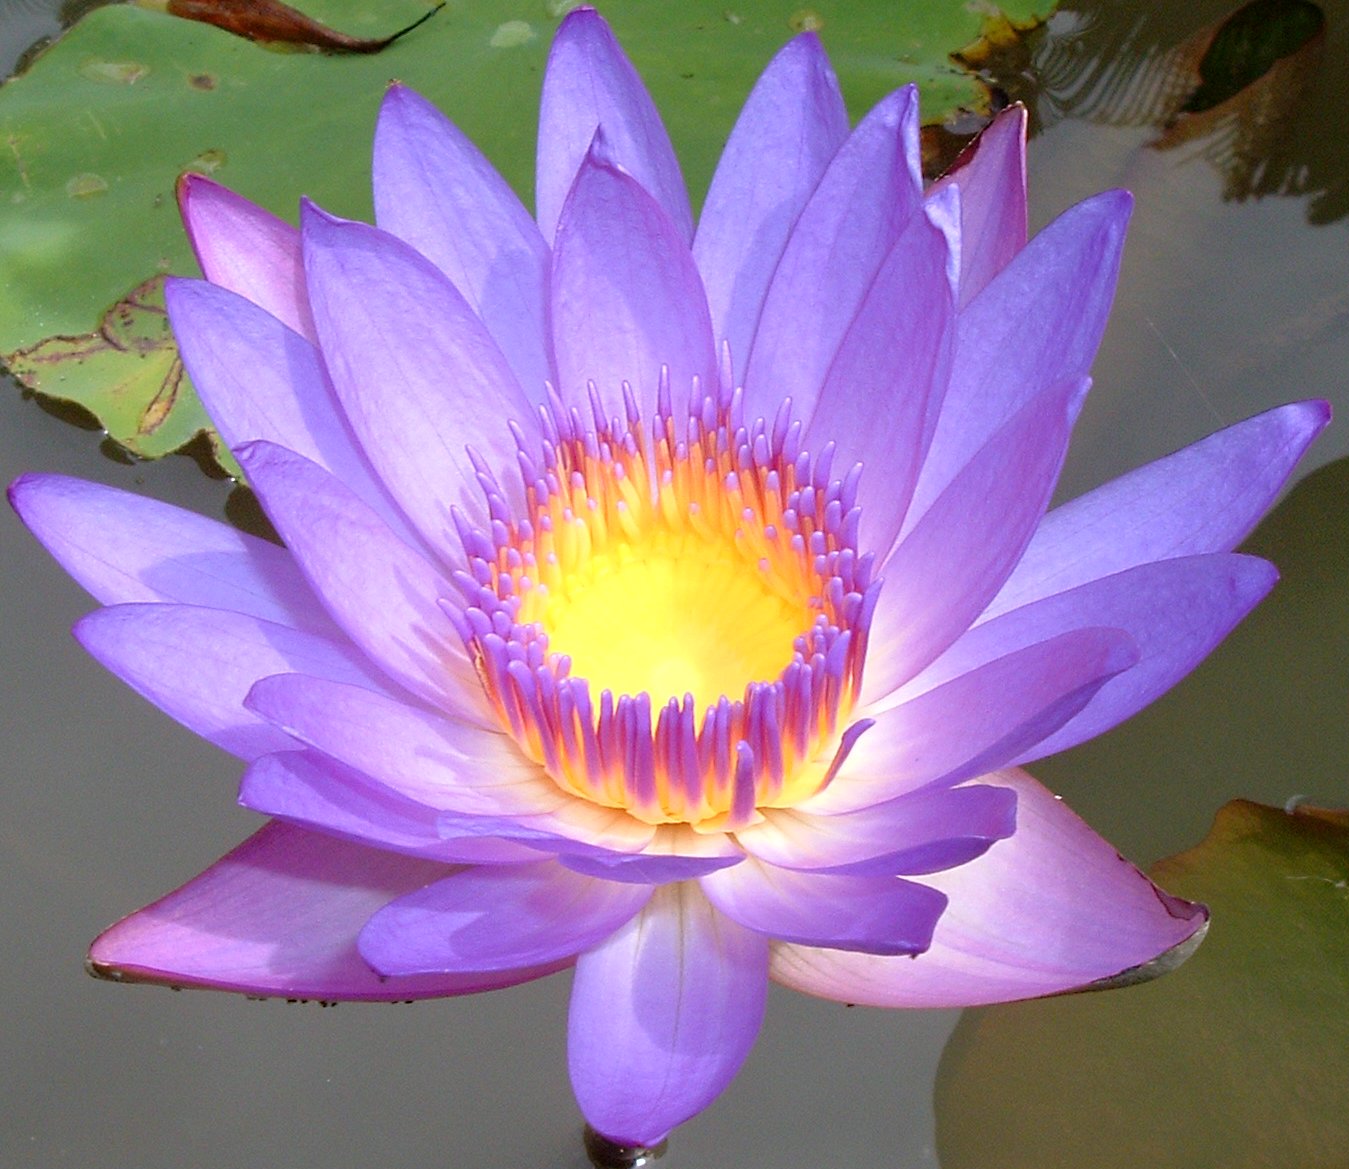 Lotus represents Lord Buddha’s illumination